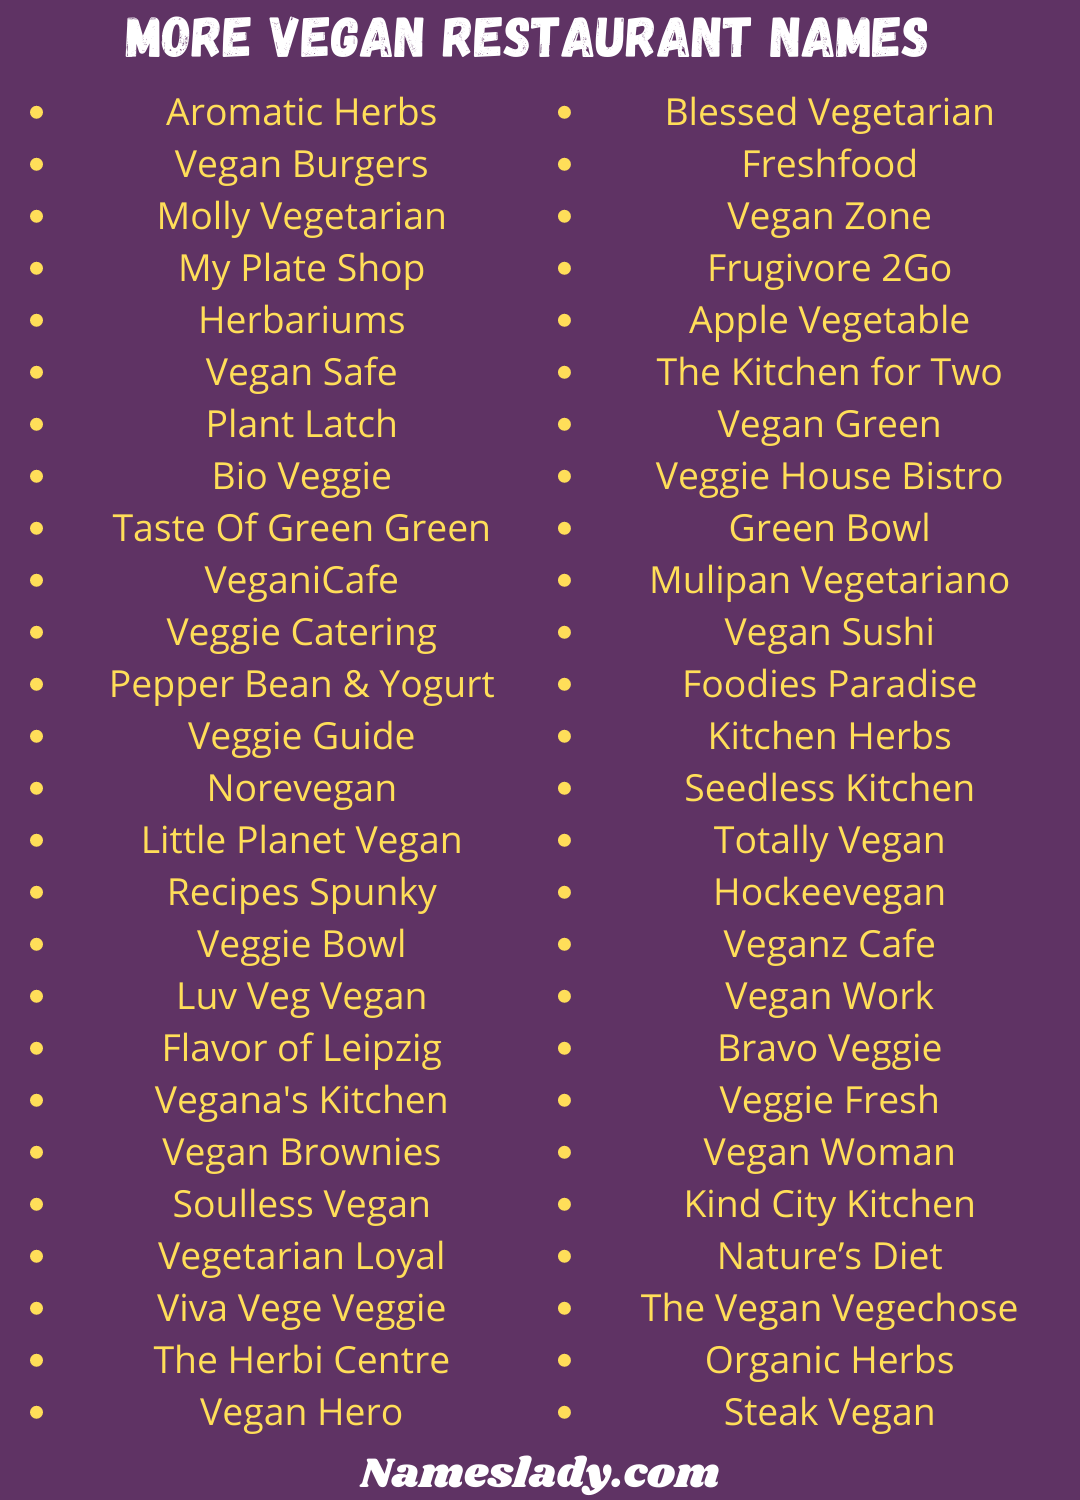 Vegan Restaurant Names